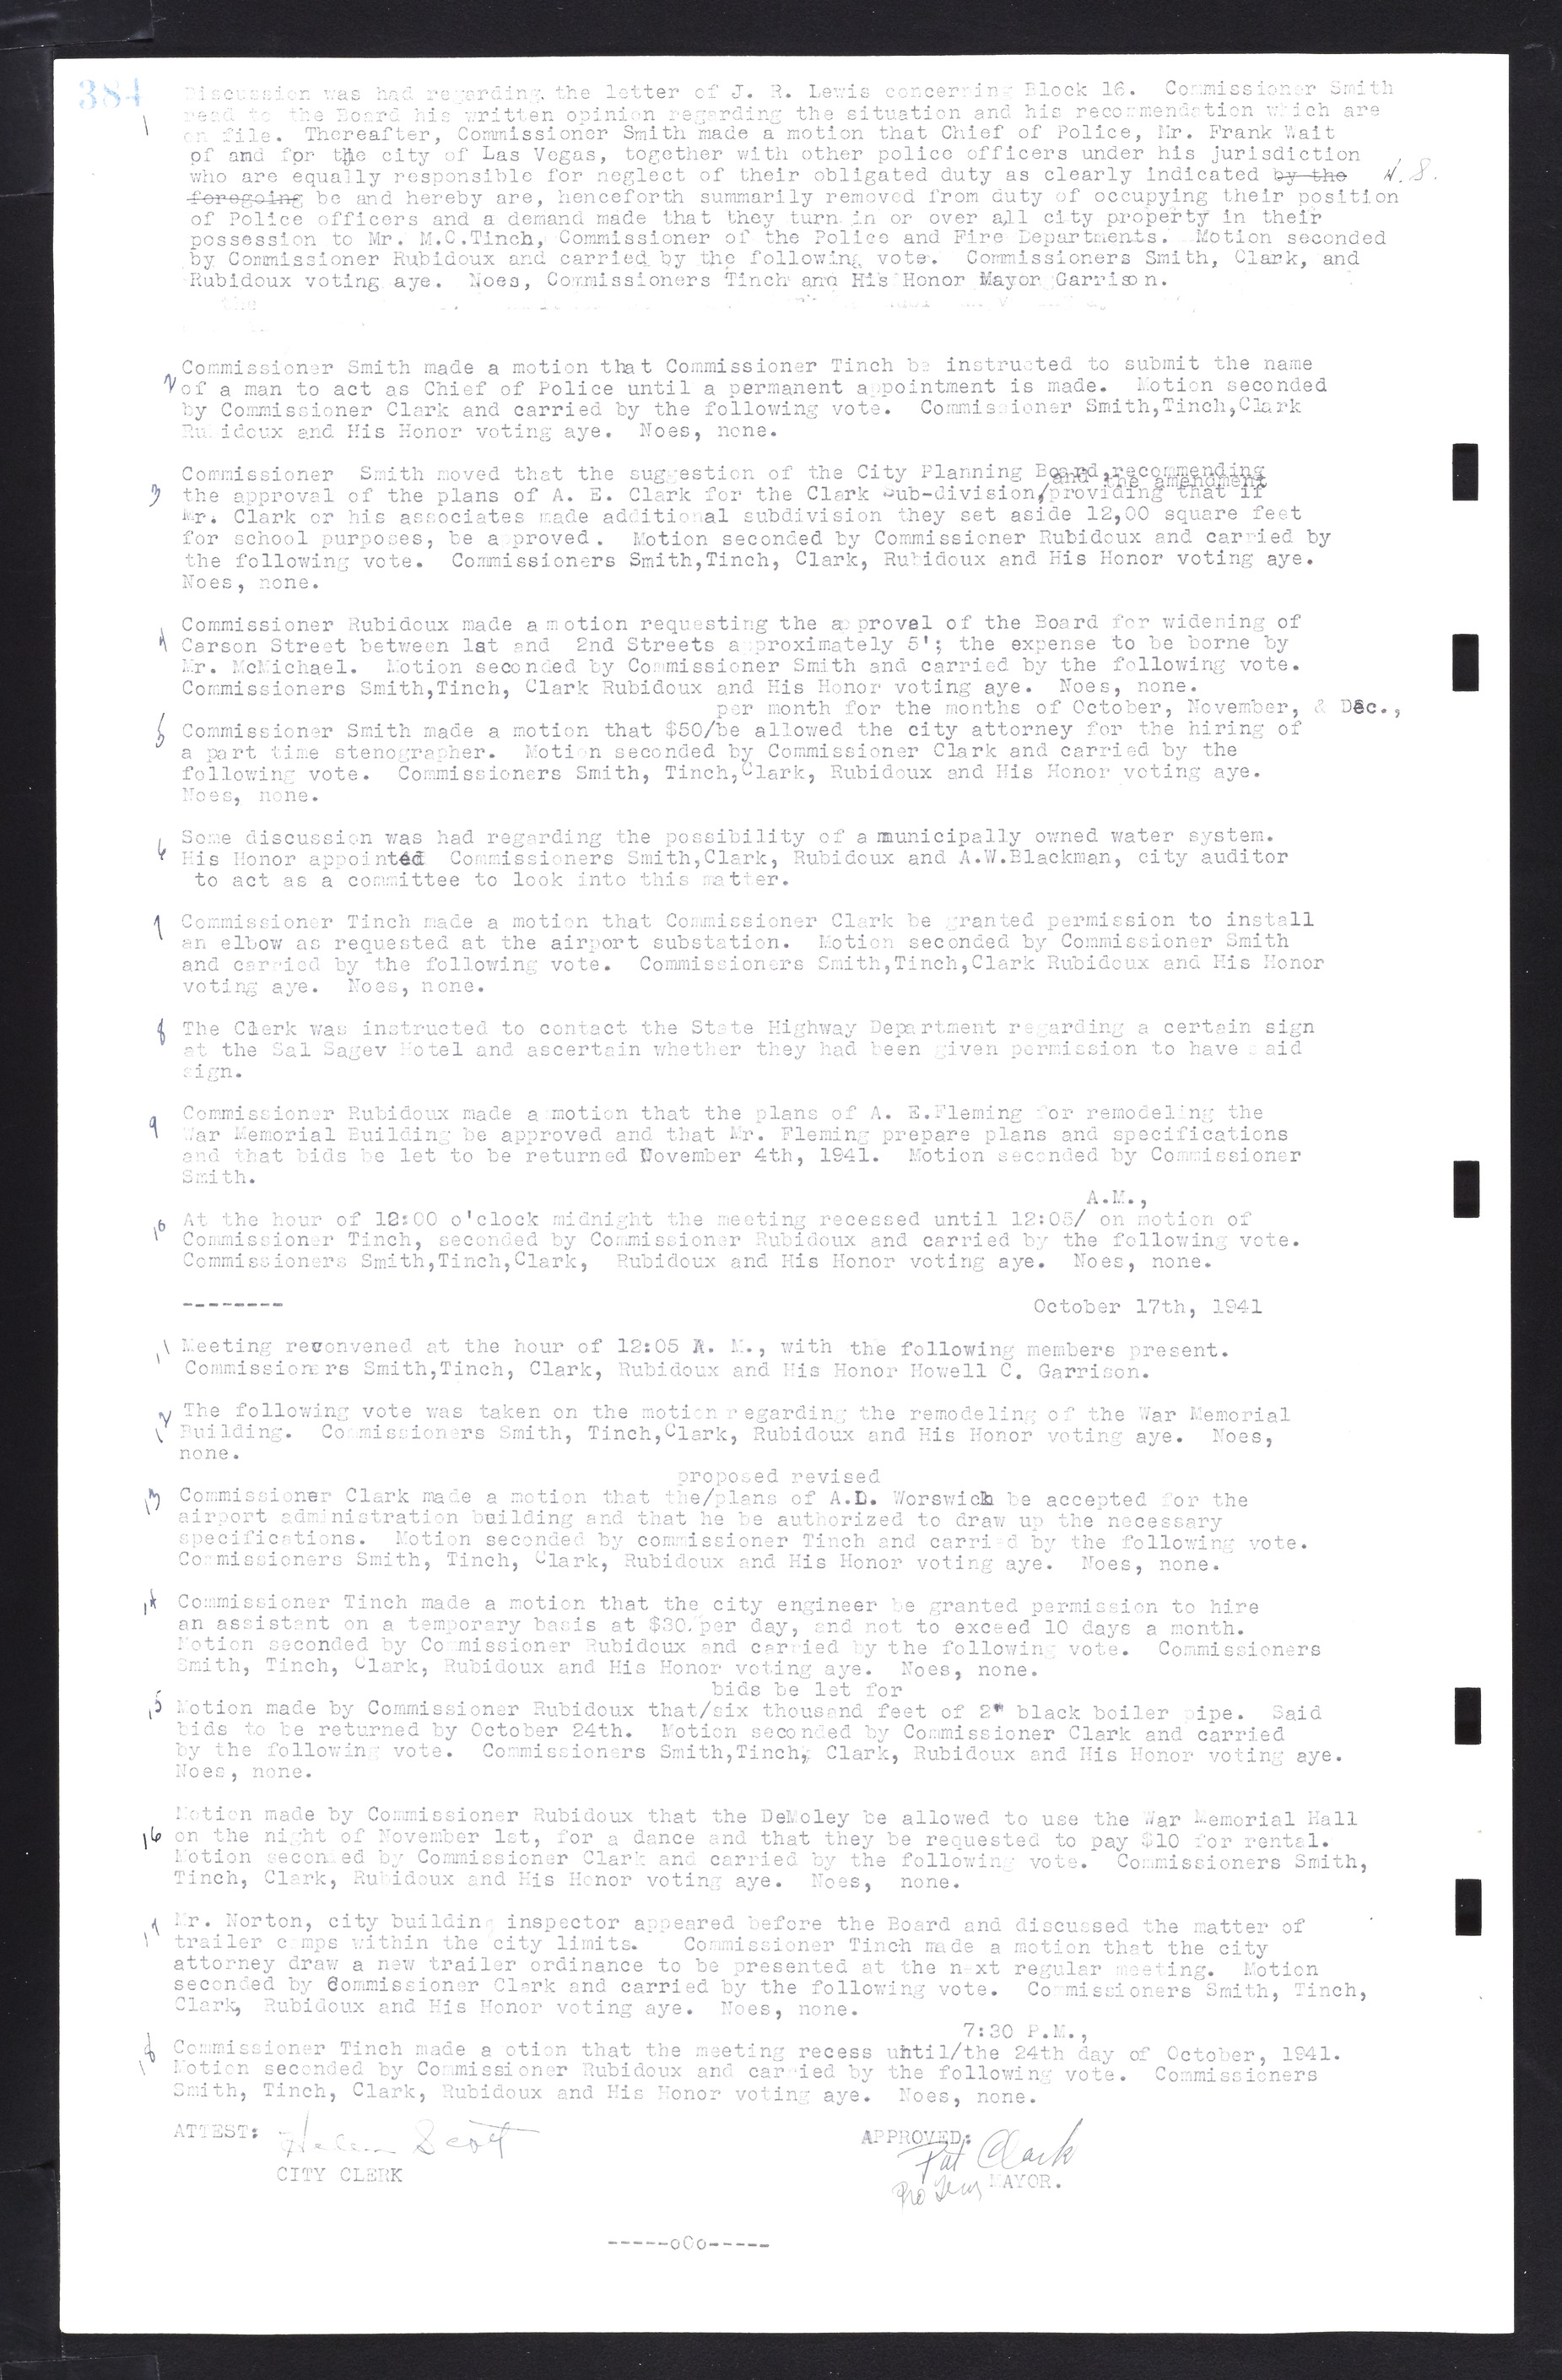 Las Vegas City Commission Minutes, February 17, 1937 to August 4, 1942, lvc000004-410